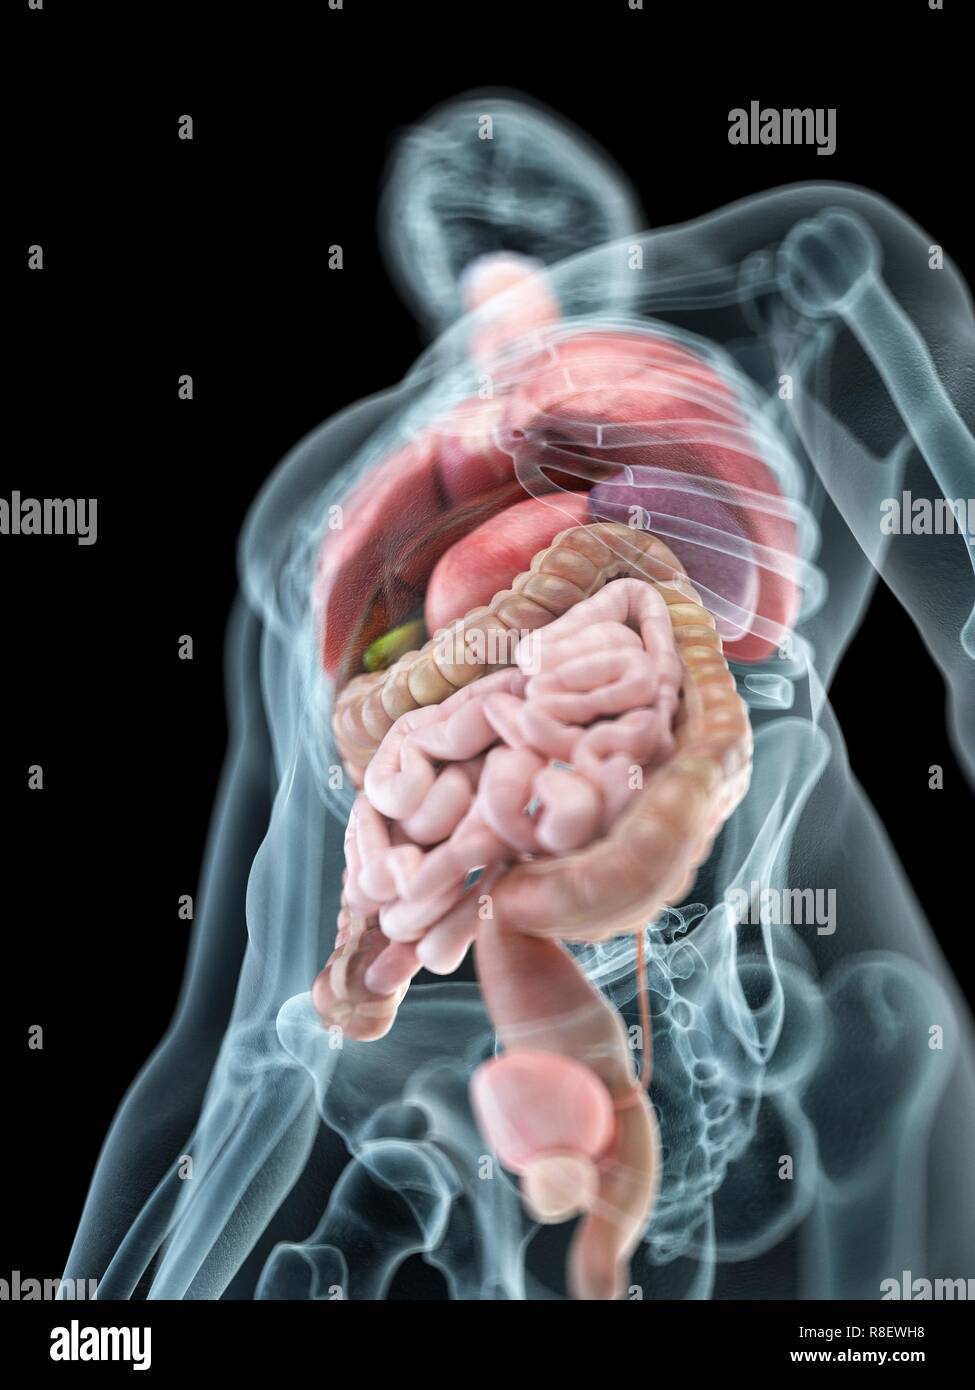 Illustration of a man's internal organs. Stock Photo